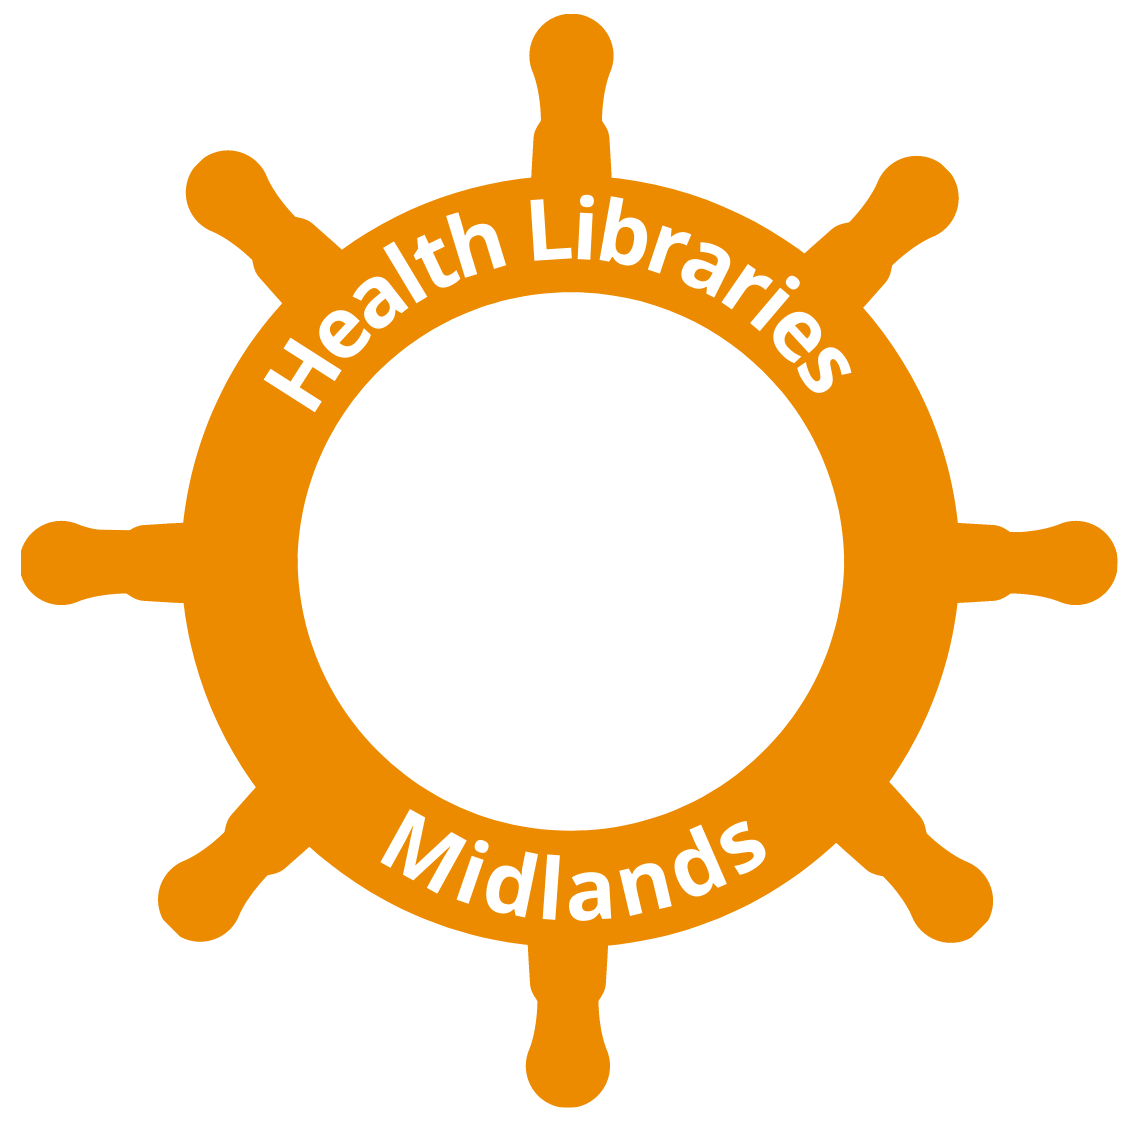 Health Libraries Midlands